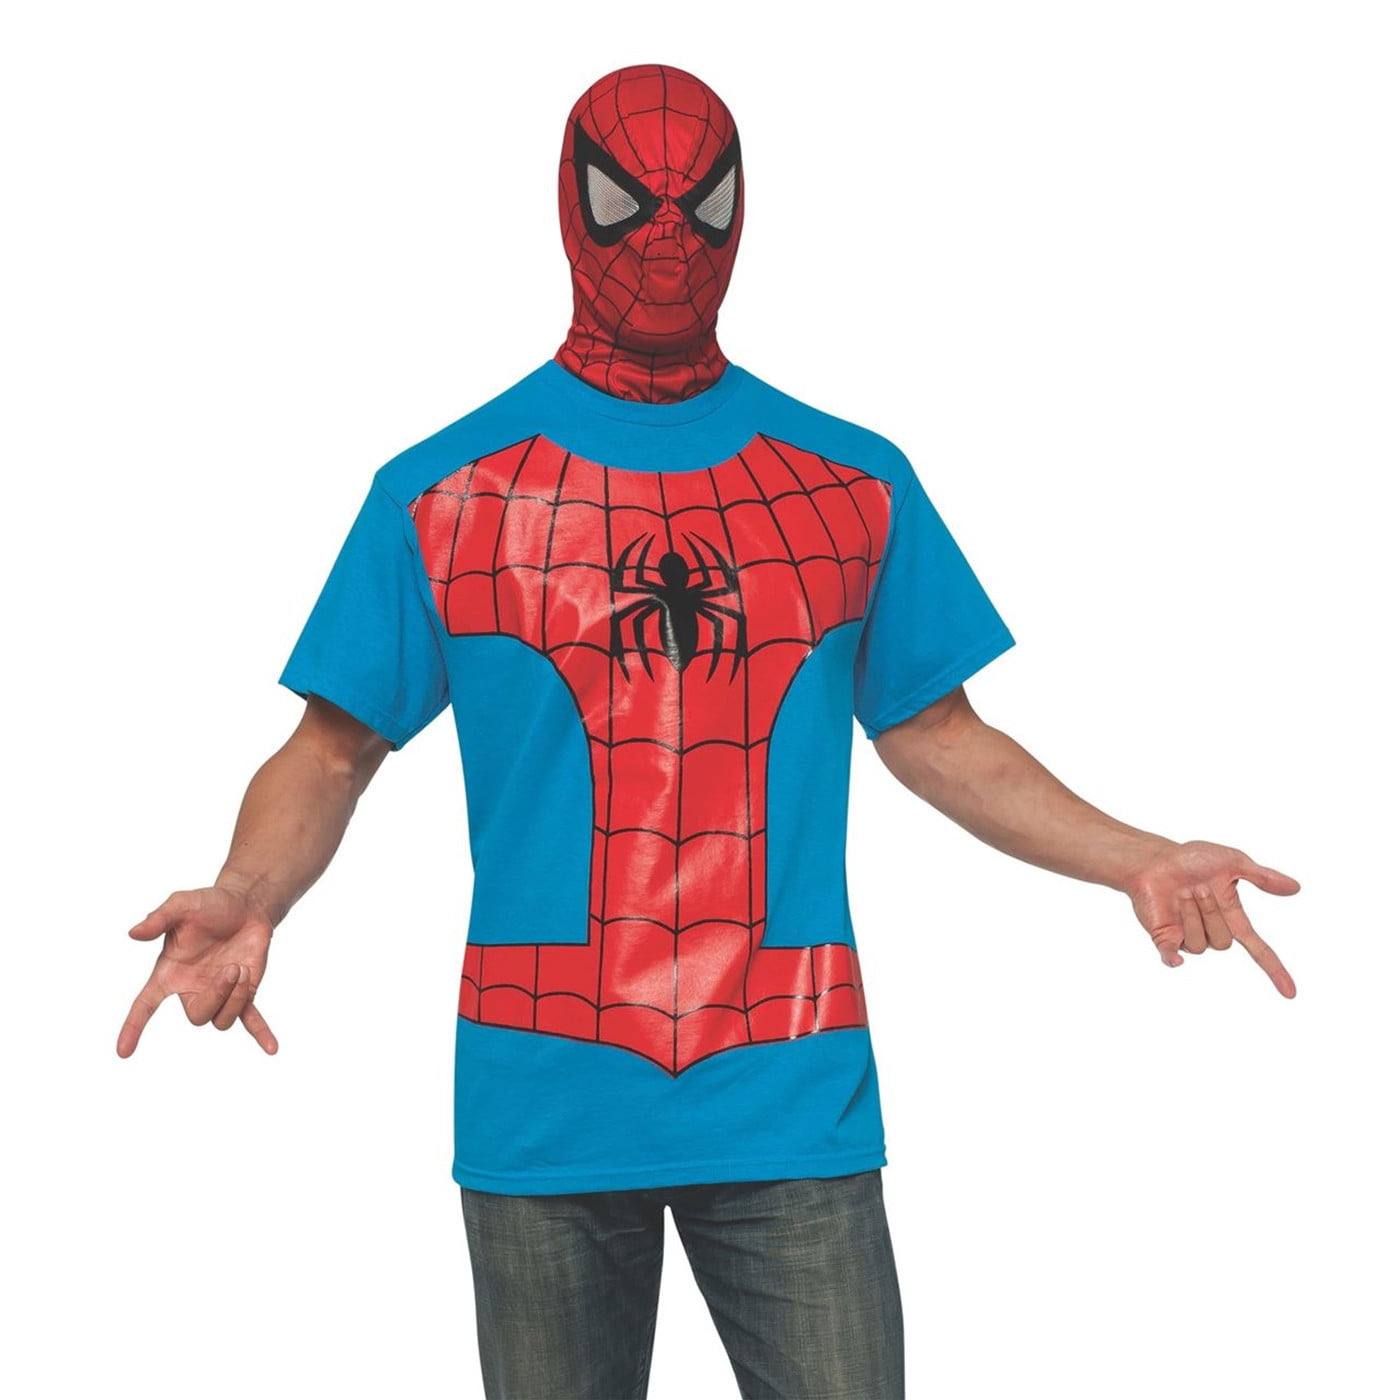 spiderman jersey